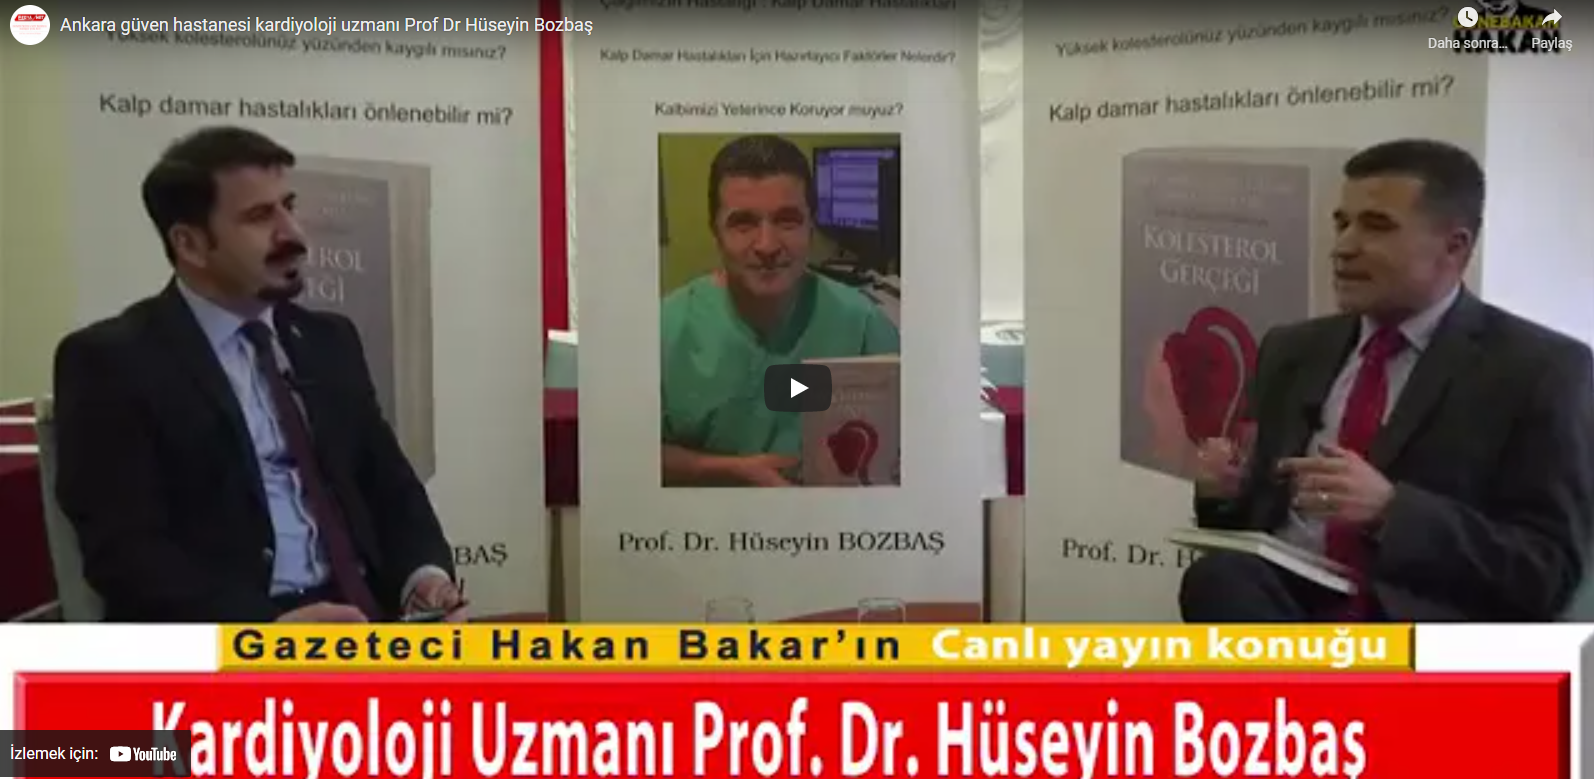 Ankara Kardiyoloji Uzmanı Prof Dr Hüseyin Bozbaş